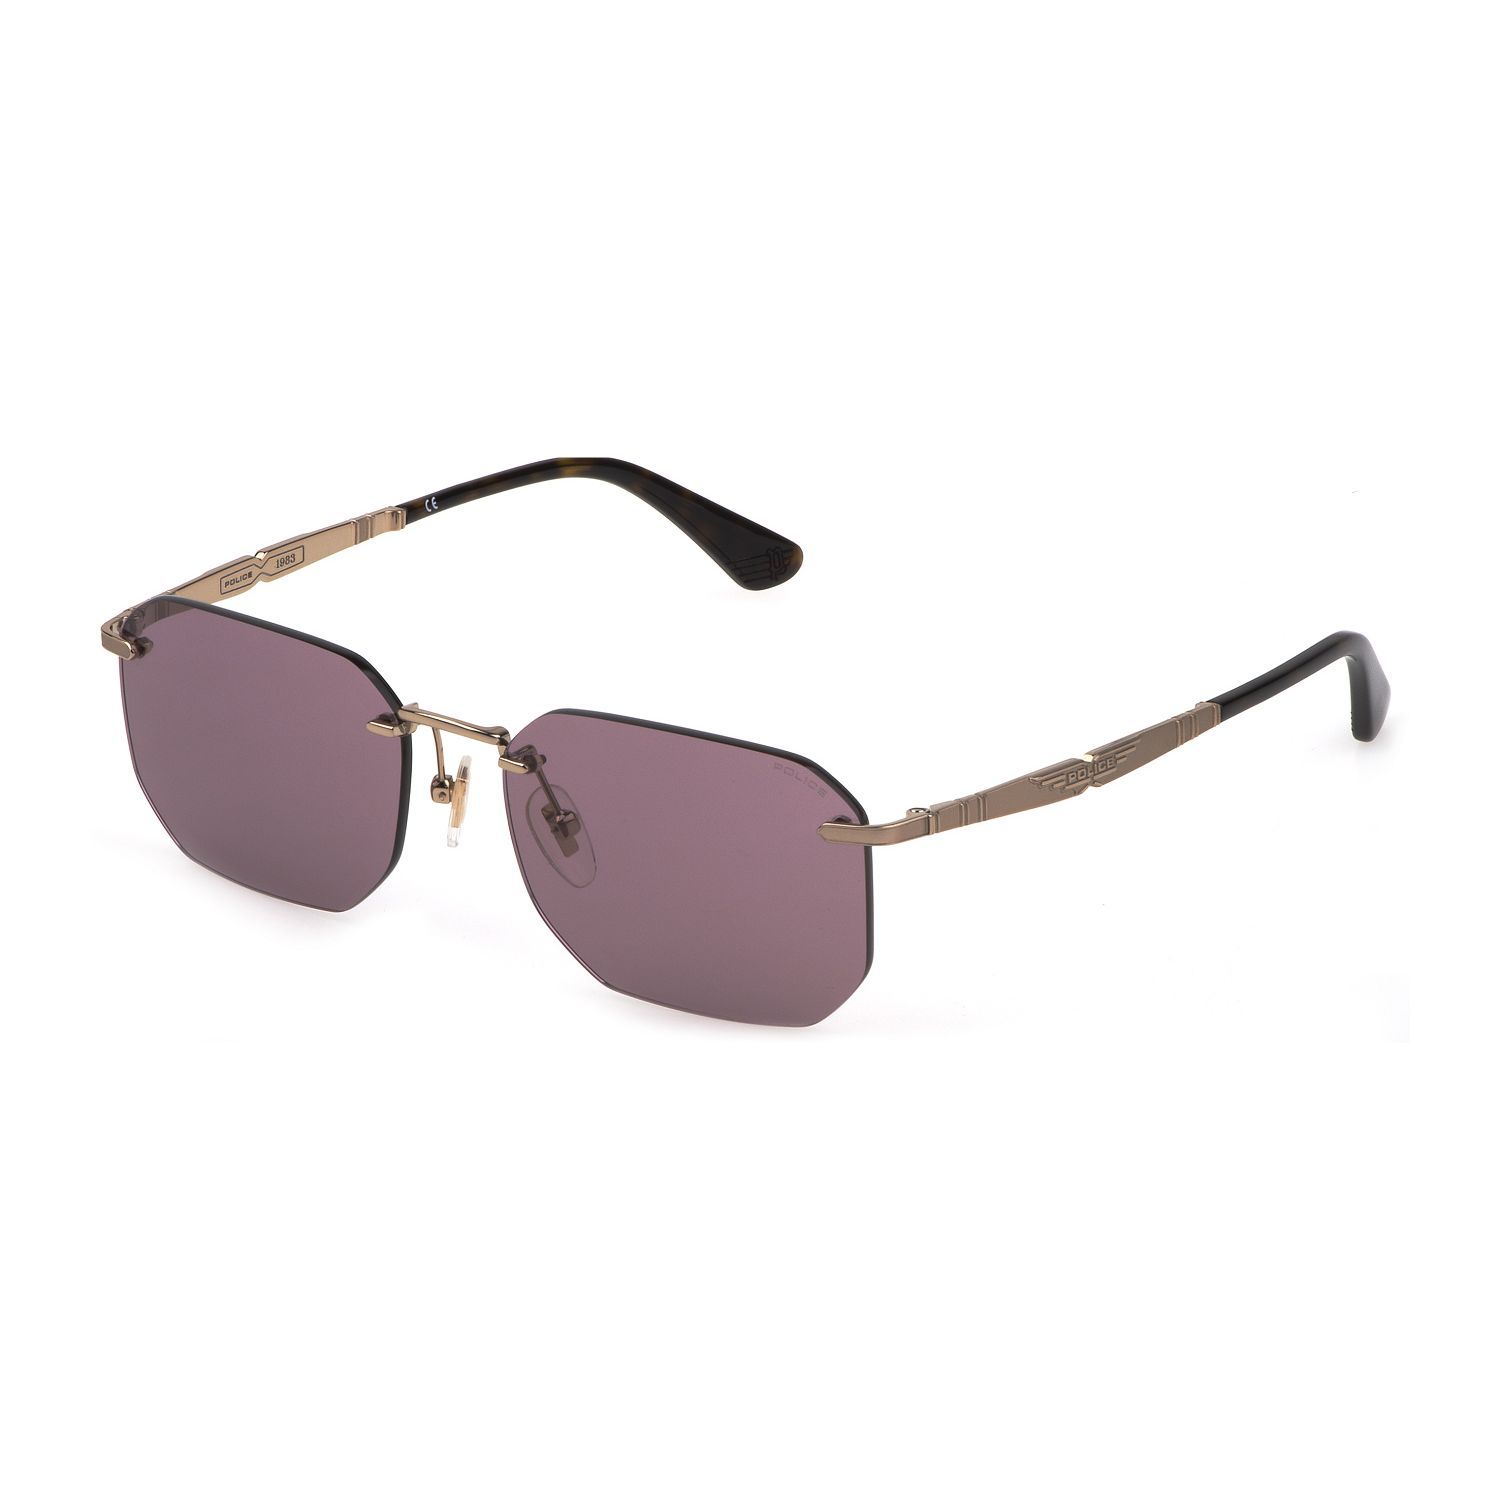 SPLF69M Rectangle Sunglasses 8M6 - size 55